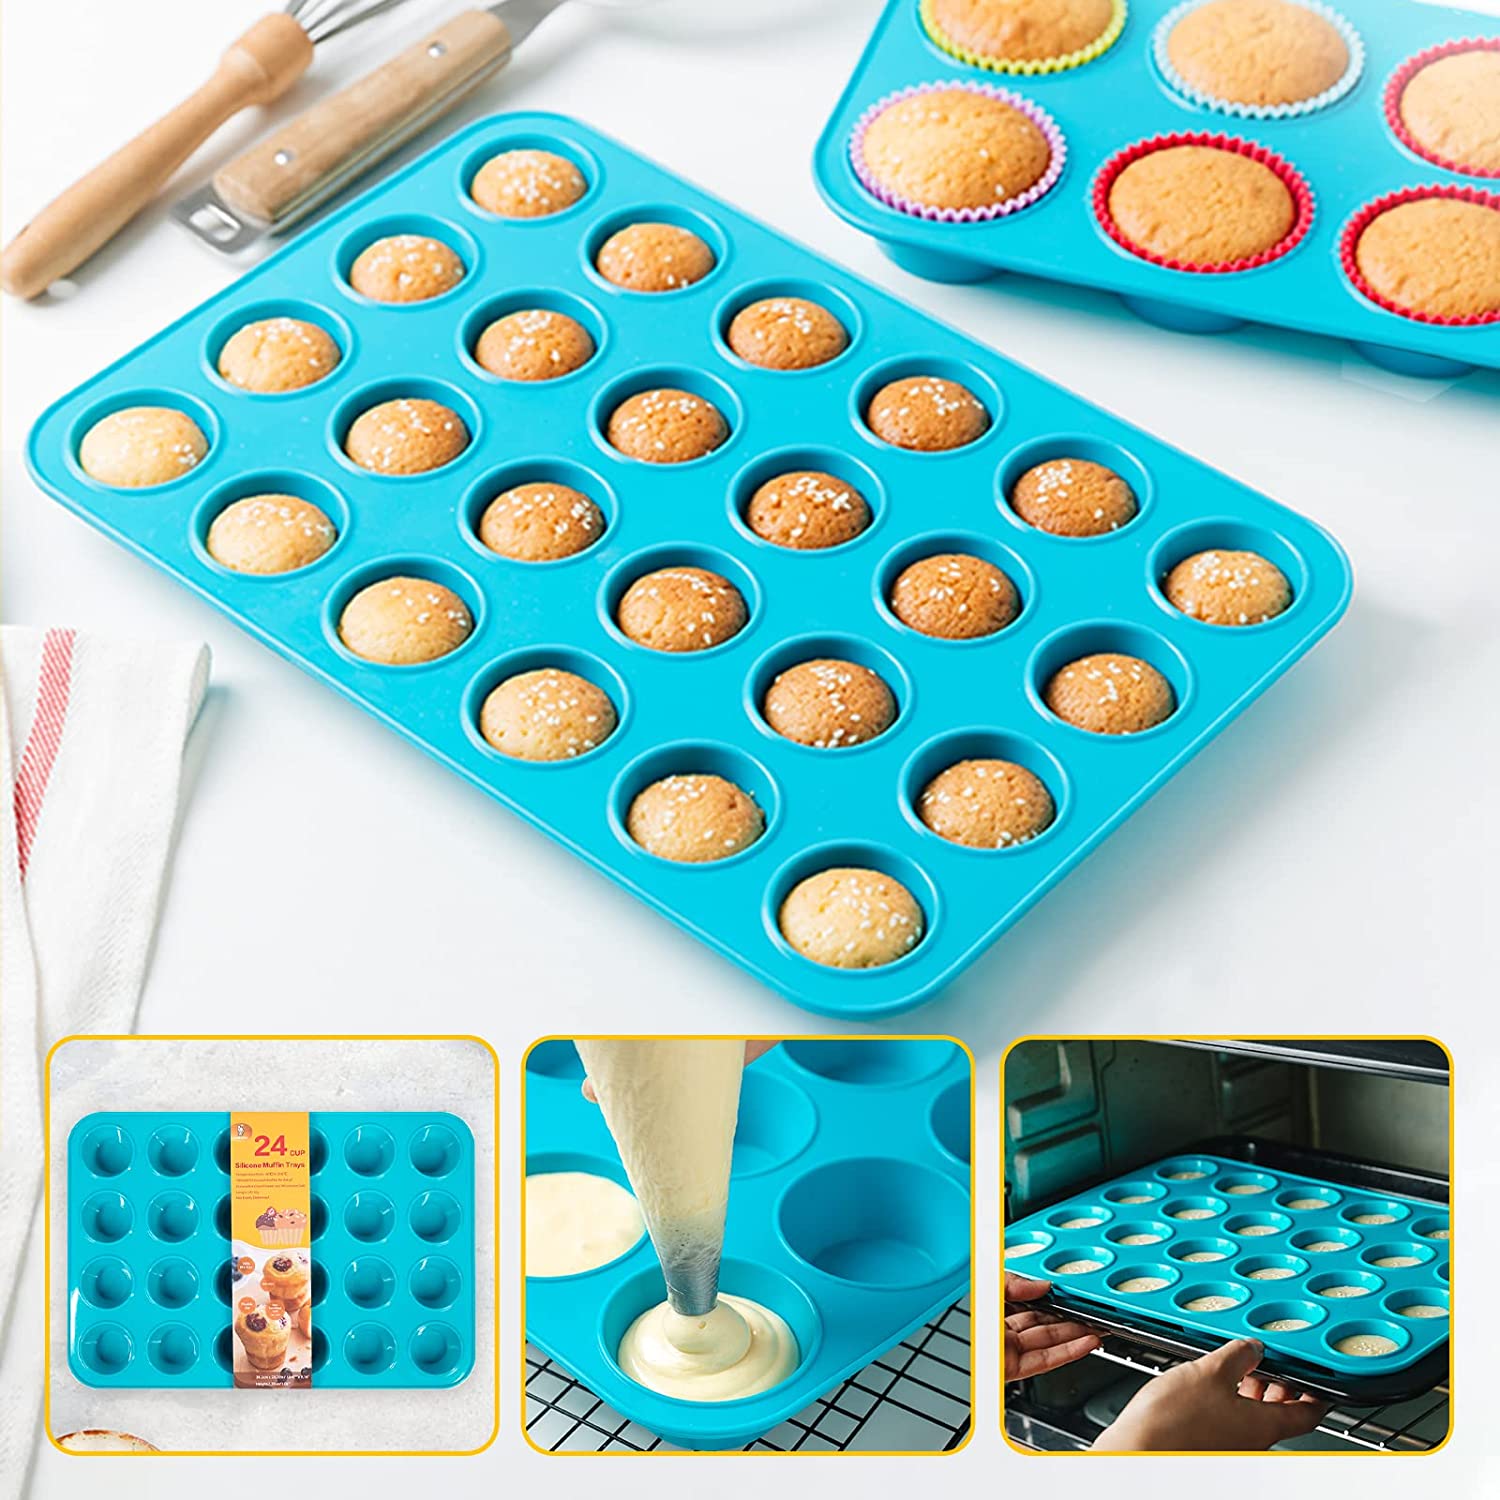 KPKitchen 24 Cup Silicone Muffin & Cupcake Baking Pan - Non Stick, BPA Free, 100% Silicone & Dishwasher Safe Mini Silicon Bakeware Tin - Blue